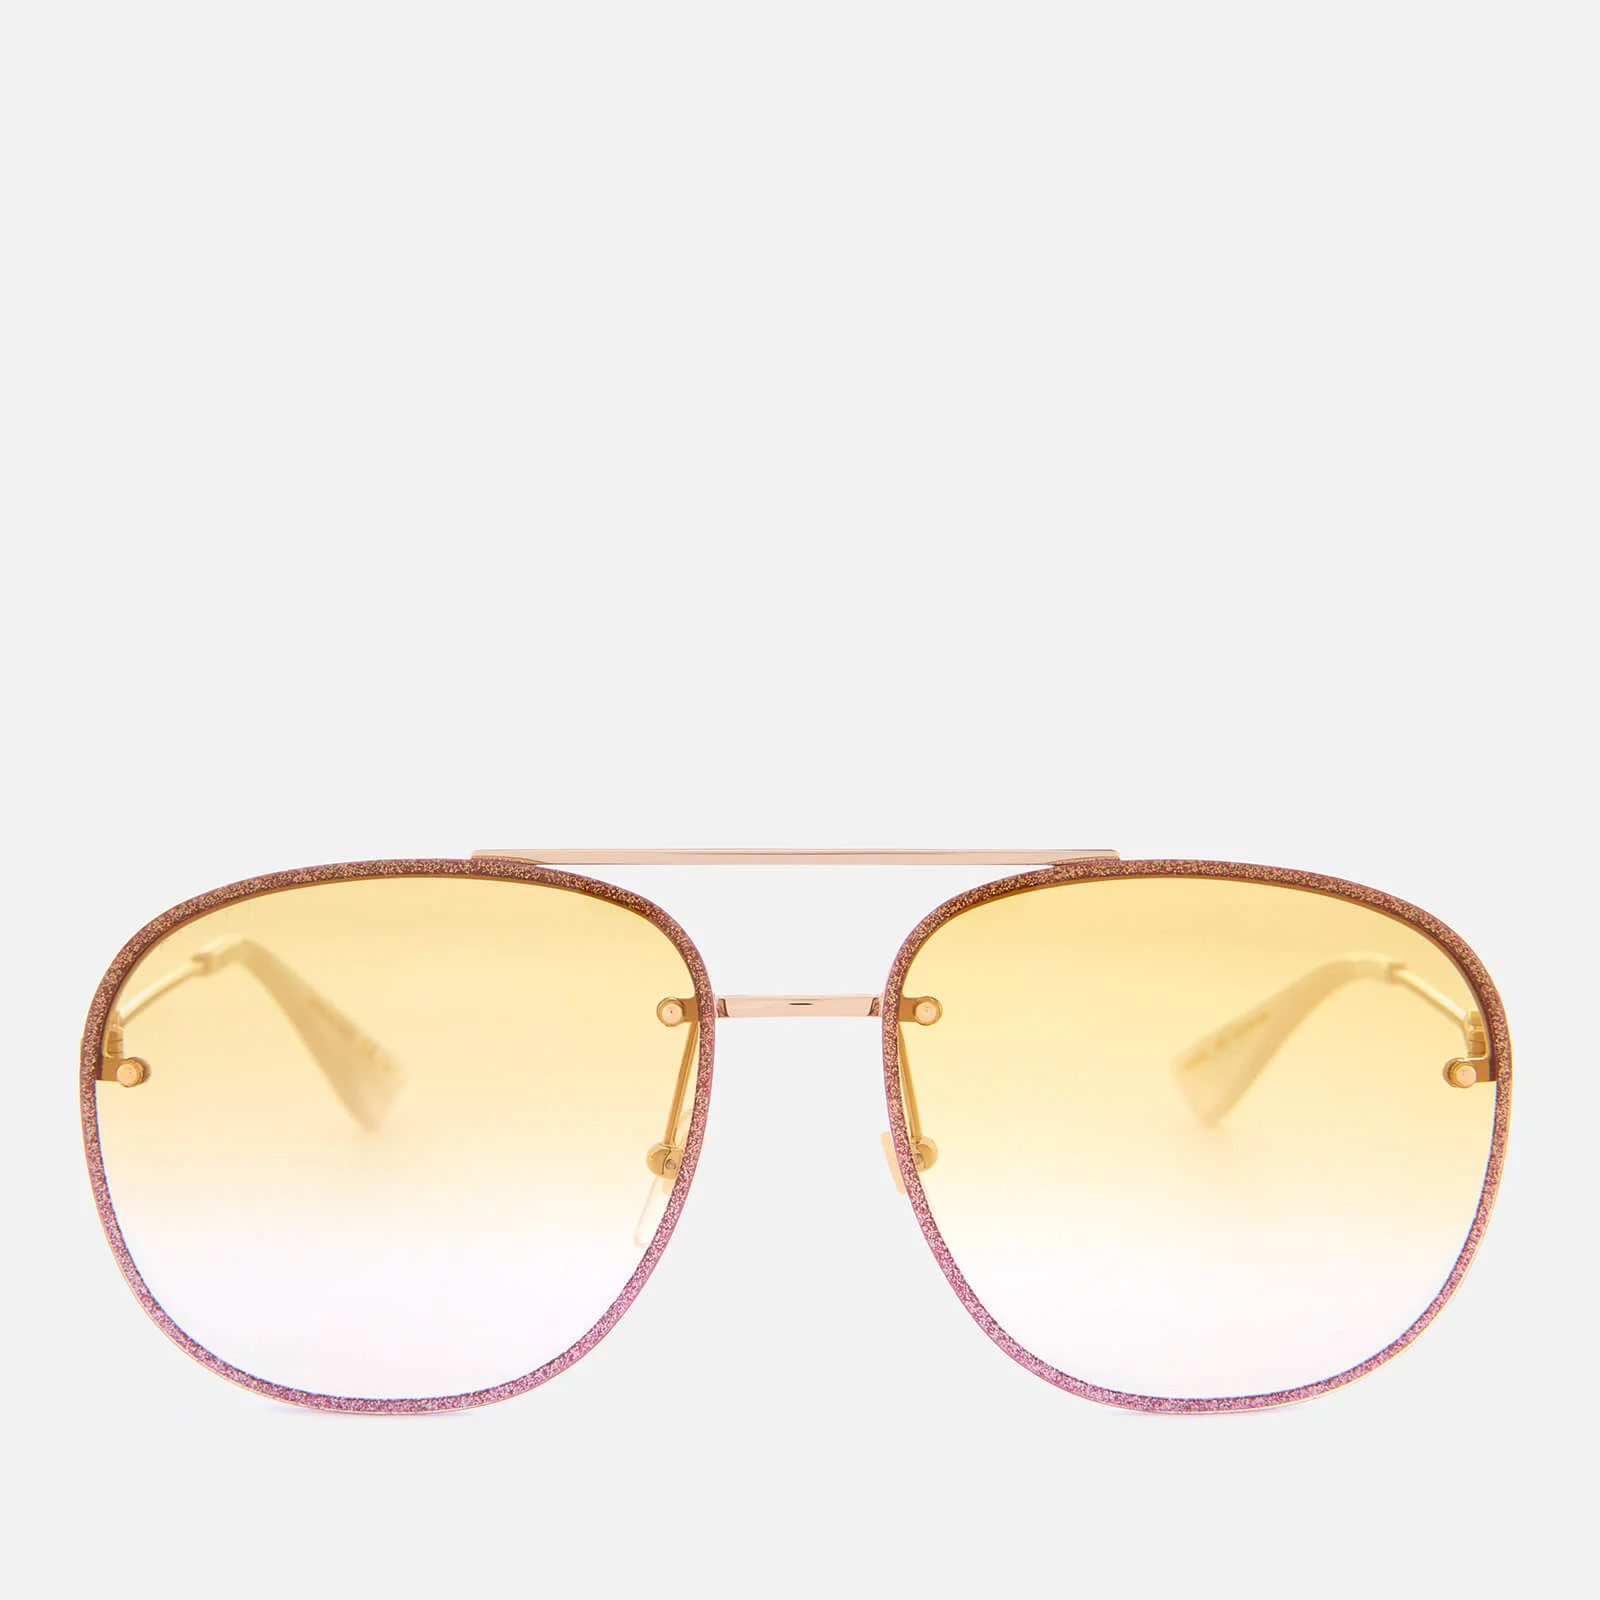 Gucci Women's Metal Tinted Aviator Sunglasses - Gold/Yellow Image 1